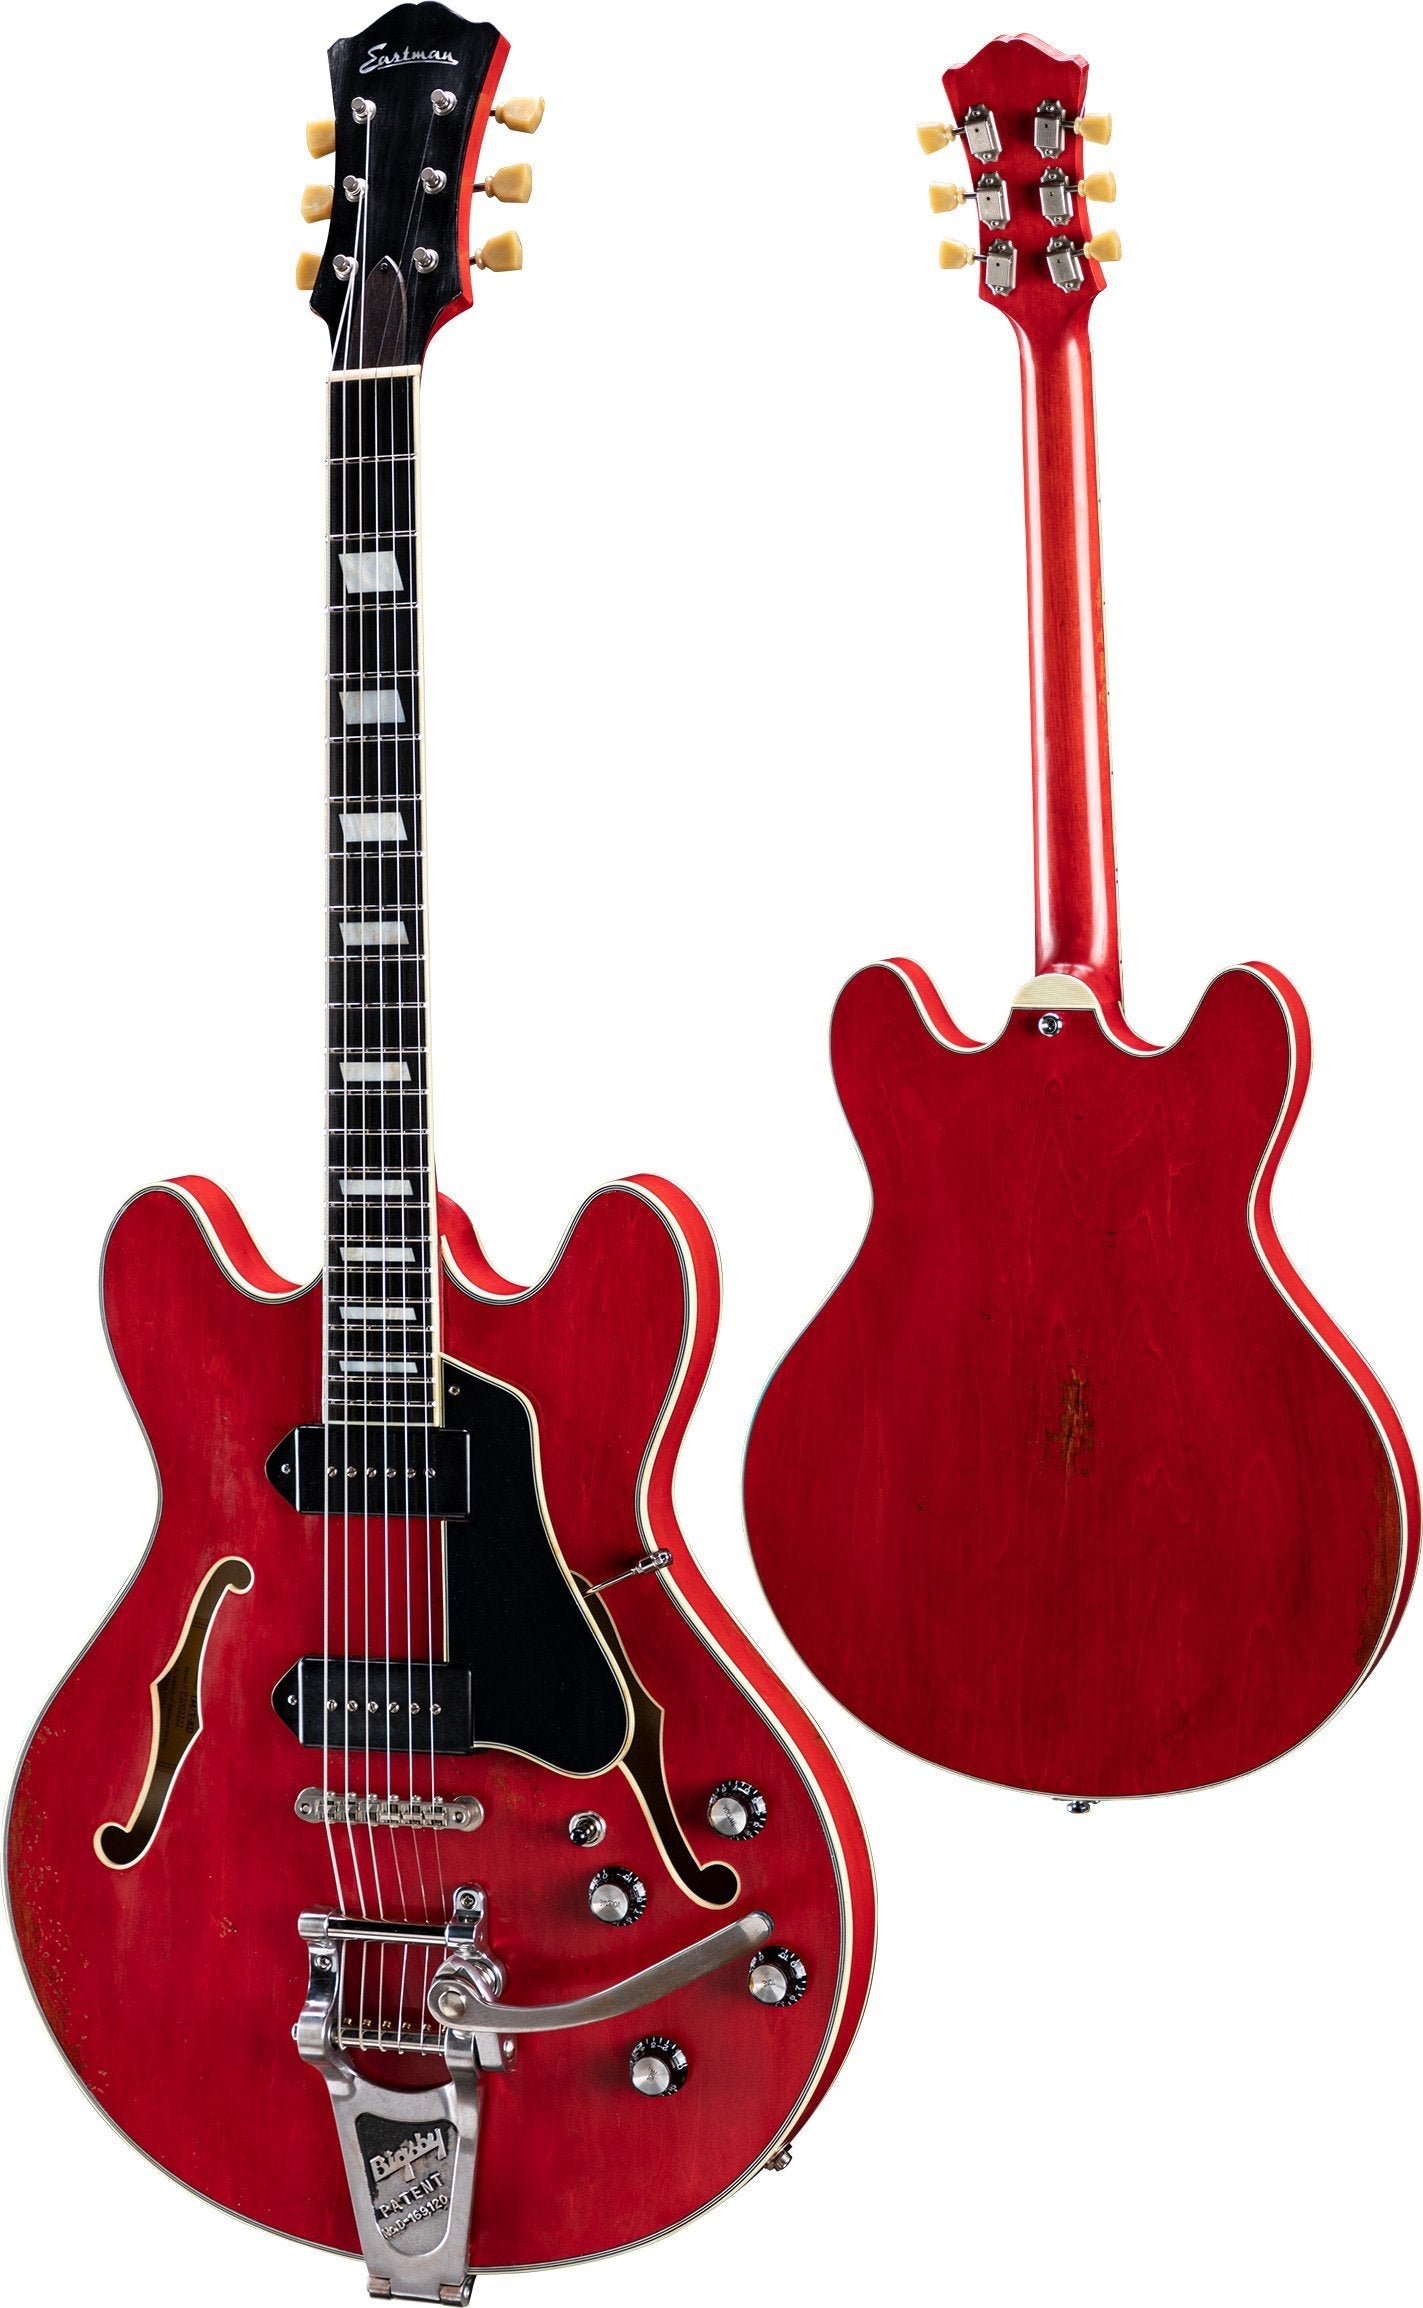 Eastman T64/v Red, Electric Guitar for sale at Richards Guitars.